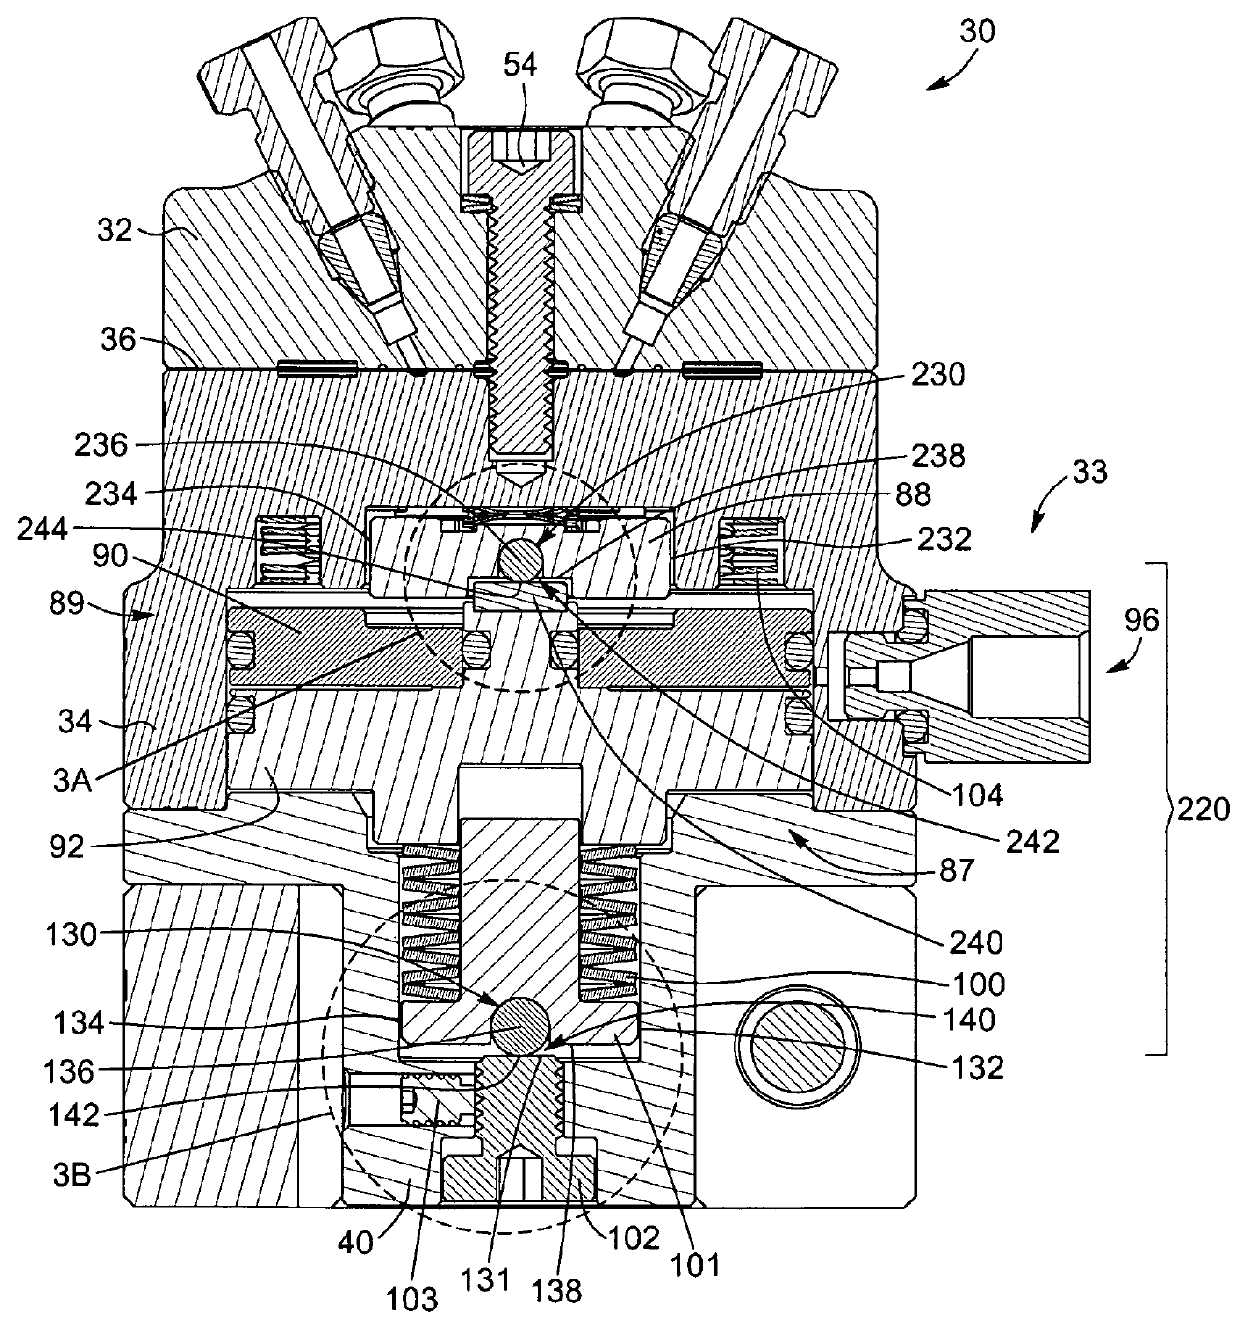 Diaphragm-sealed valve with improved actuator design